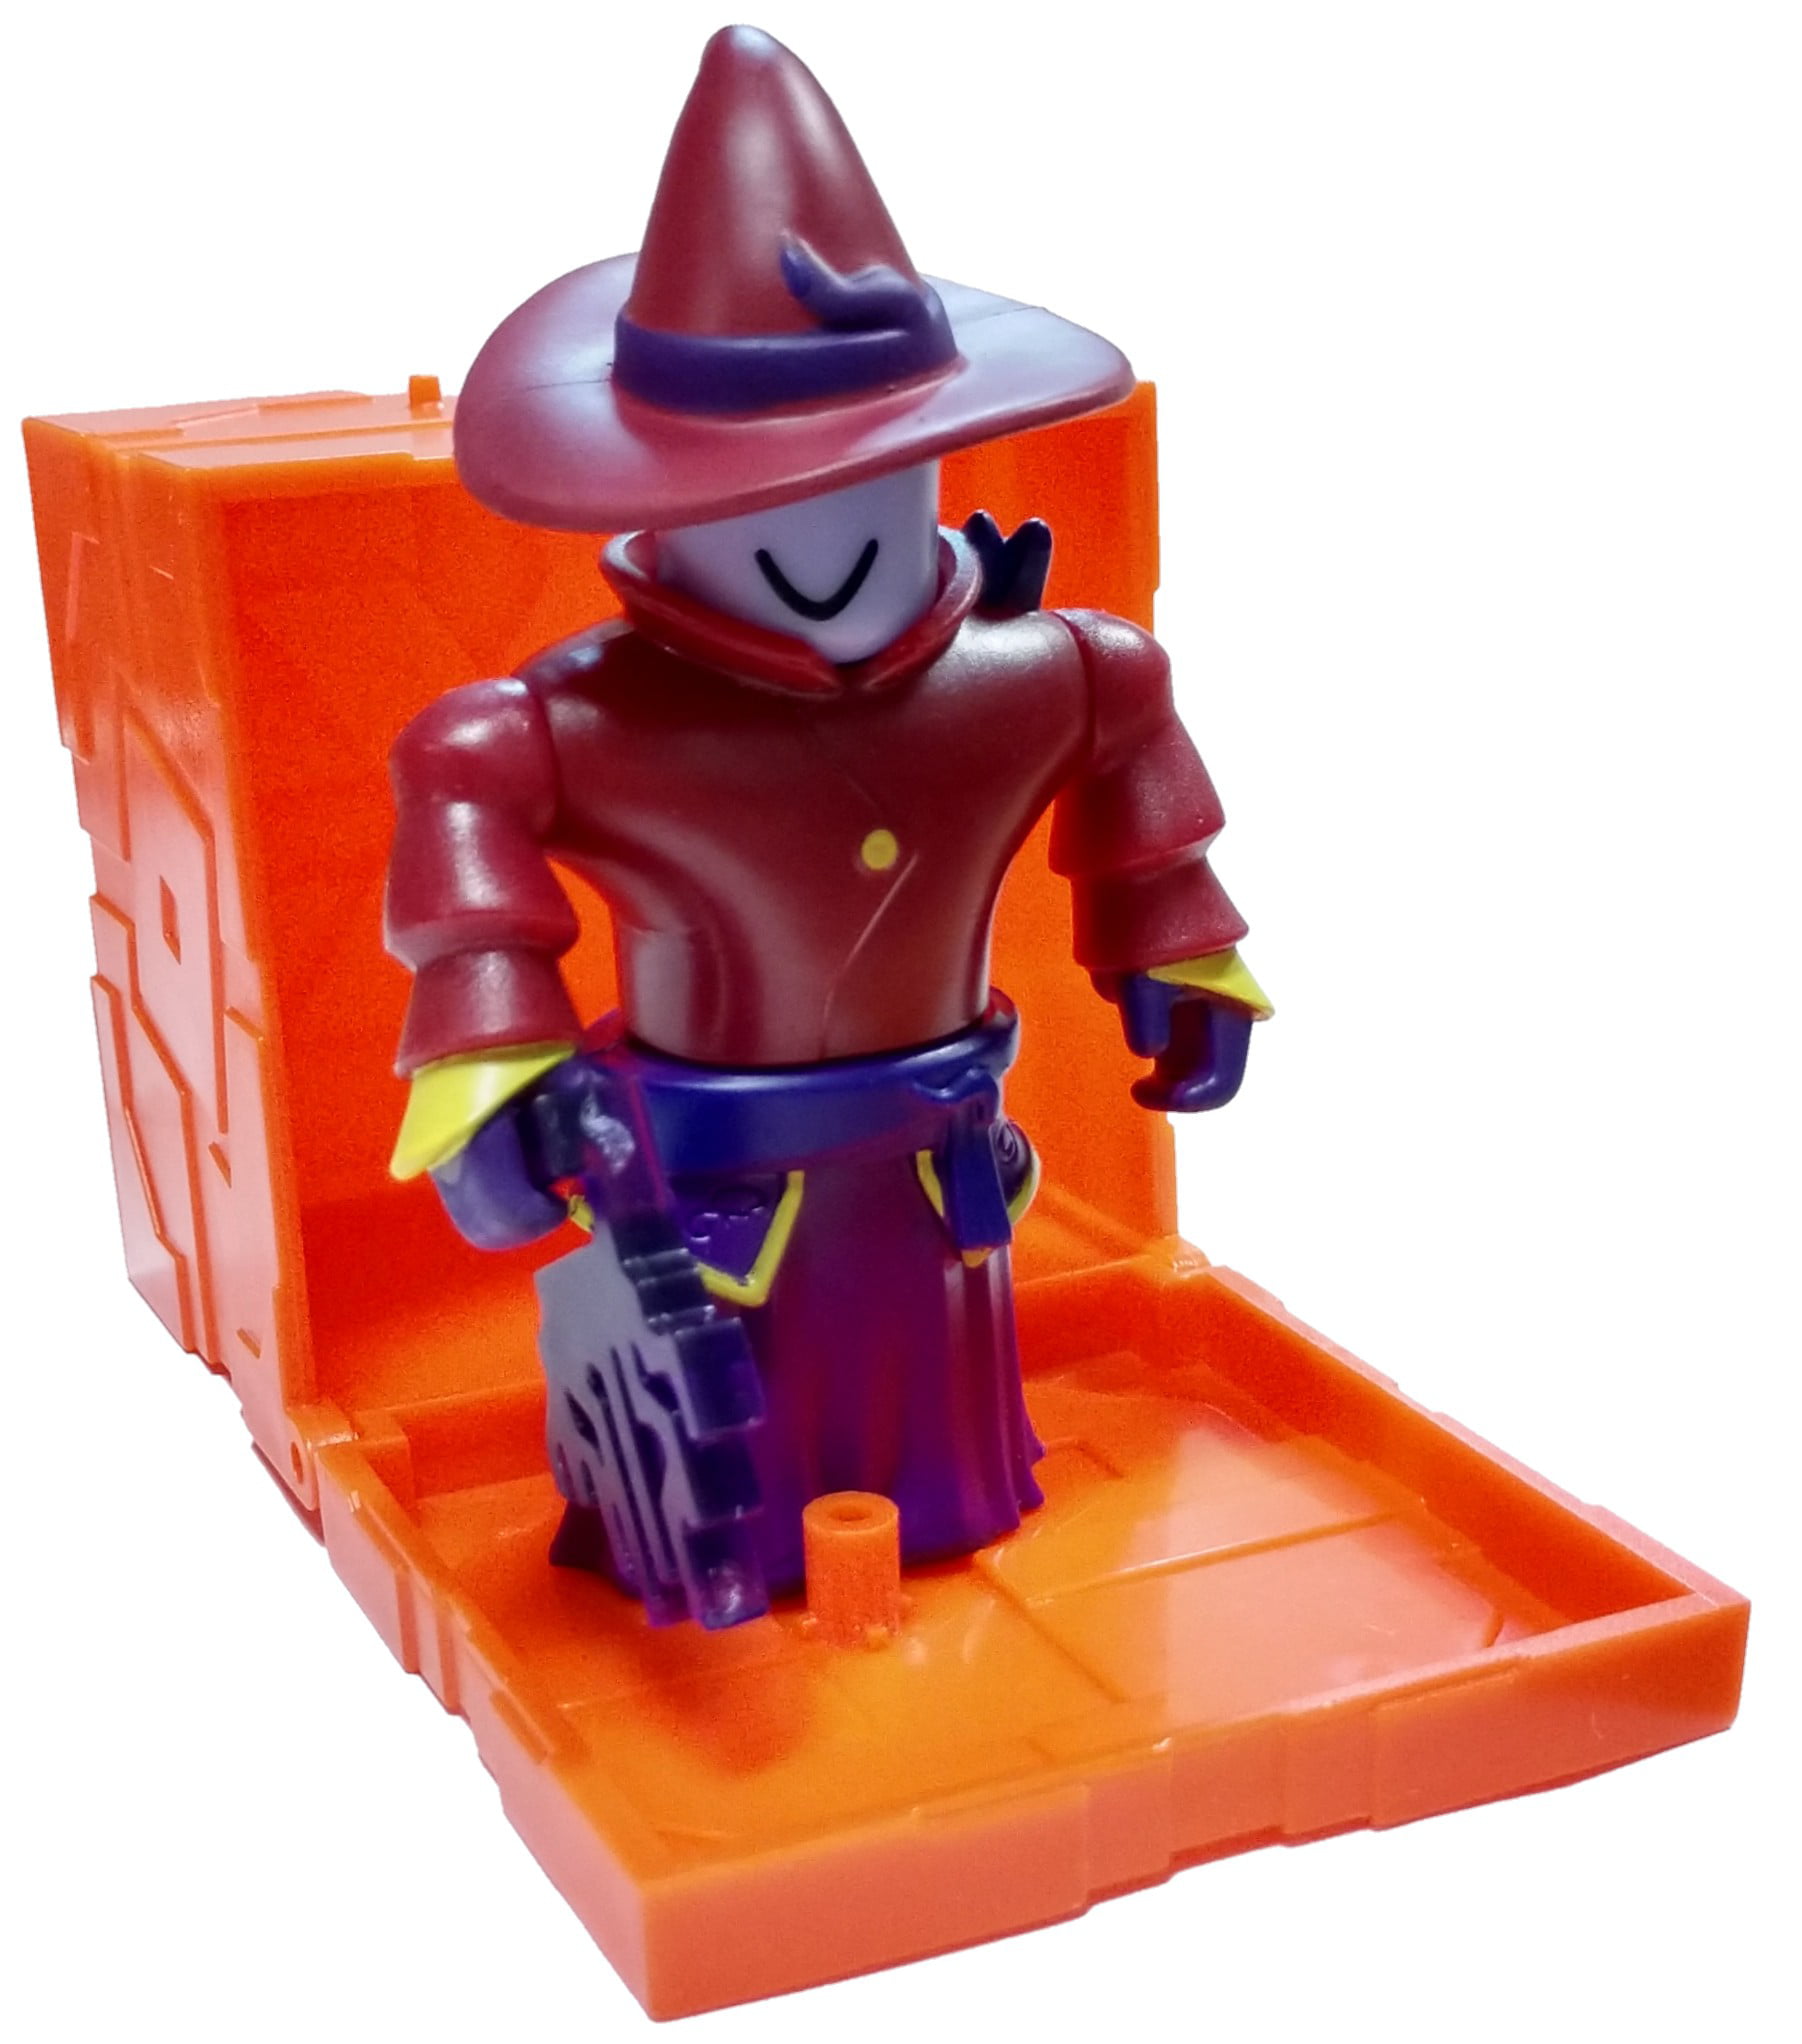 Roblox Series 6 Dread Dark Wizard Mini Figure With Orange Cube And Online Code No Packaging Walmart Com Walmart Com - dreads roblox